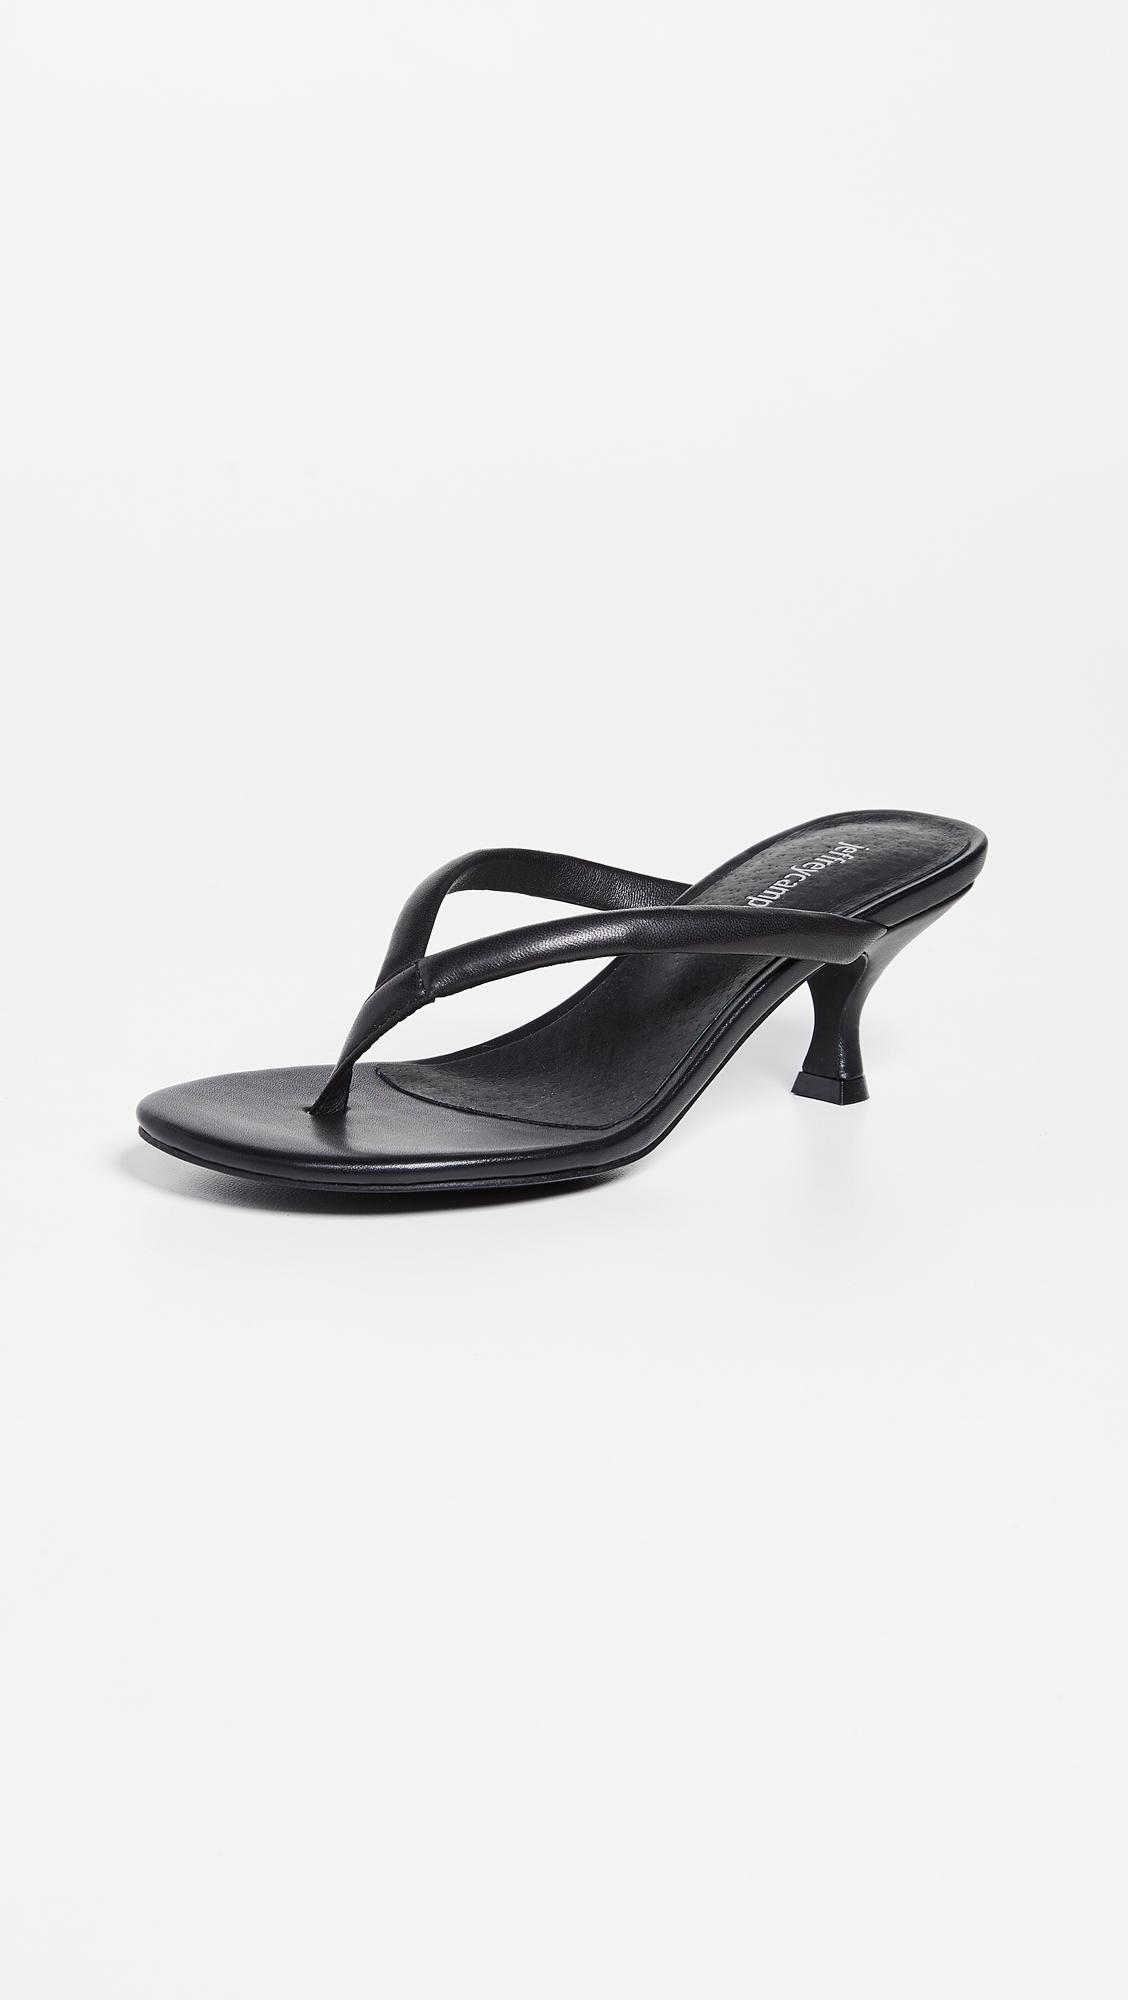 flip flop heels black